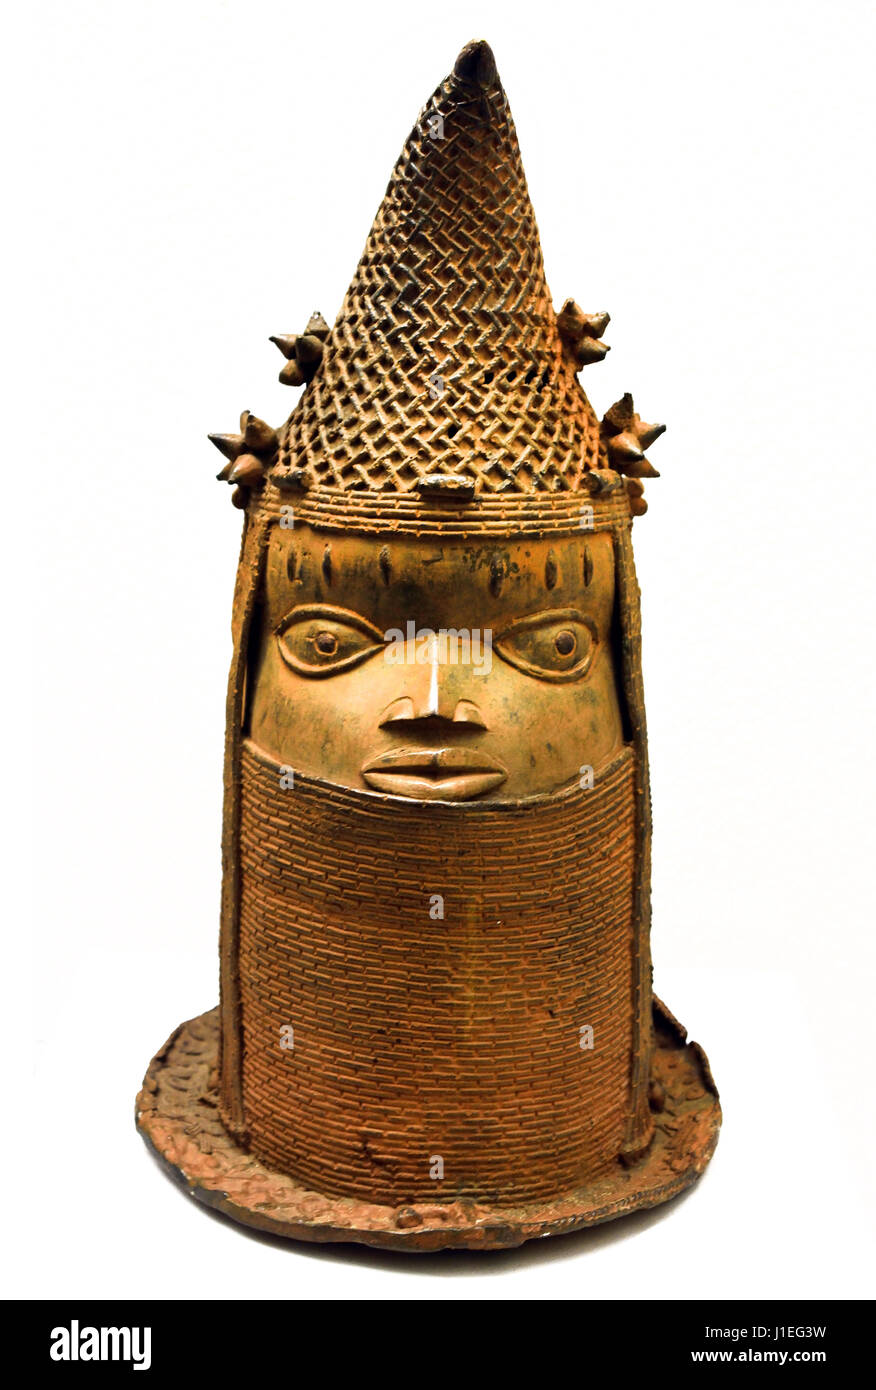 Denkmal, Kopf, 16. Jahrhundert, 17. Jahrhundert n. Chr. aus Benin, Nigeria, Afrika, afrikanische, Gedenk Kopf einer Königin Mutter 18. Jahrhundert n. Chr. aus Benin, Nigeria Afrika afrikanische (Bronze) Stockfoto